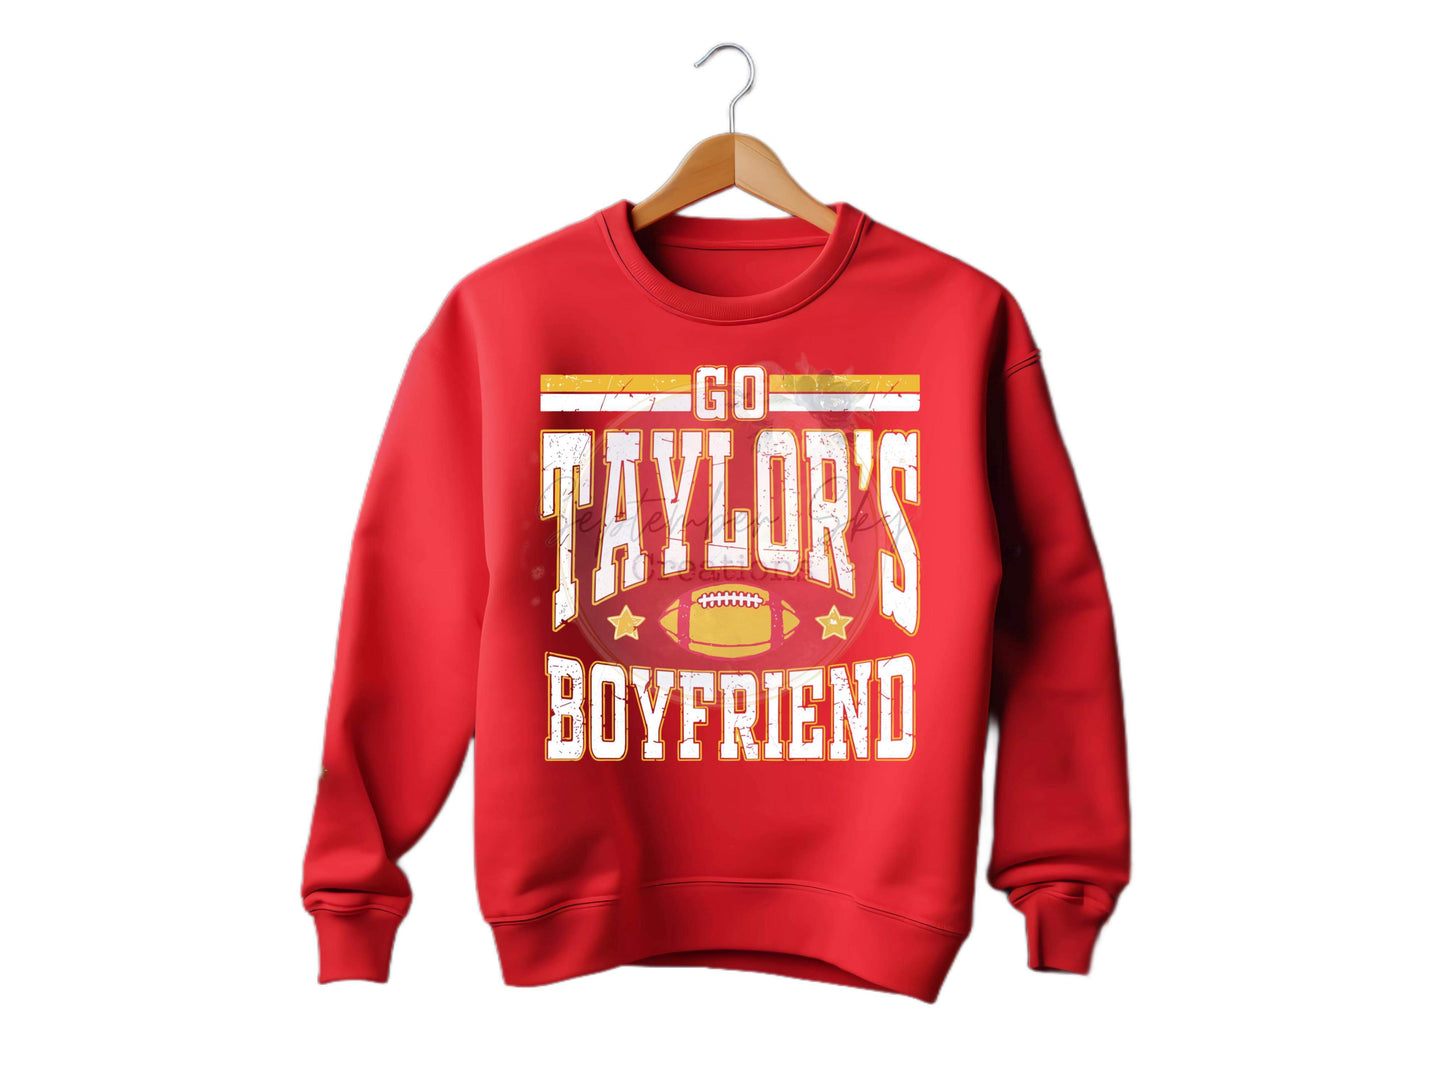 Go Taylor’s boyfriend (please read description!)